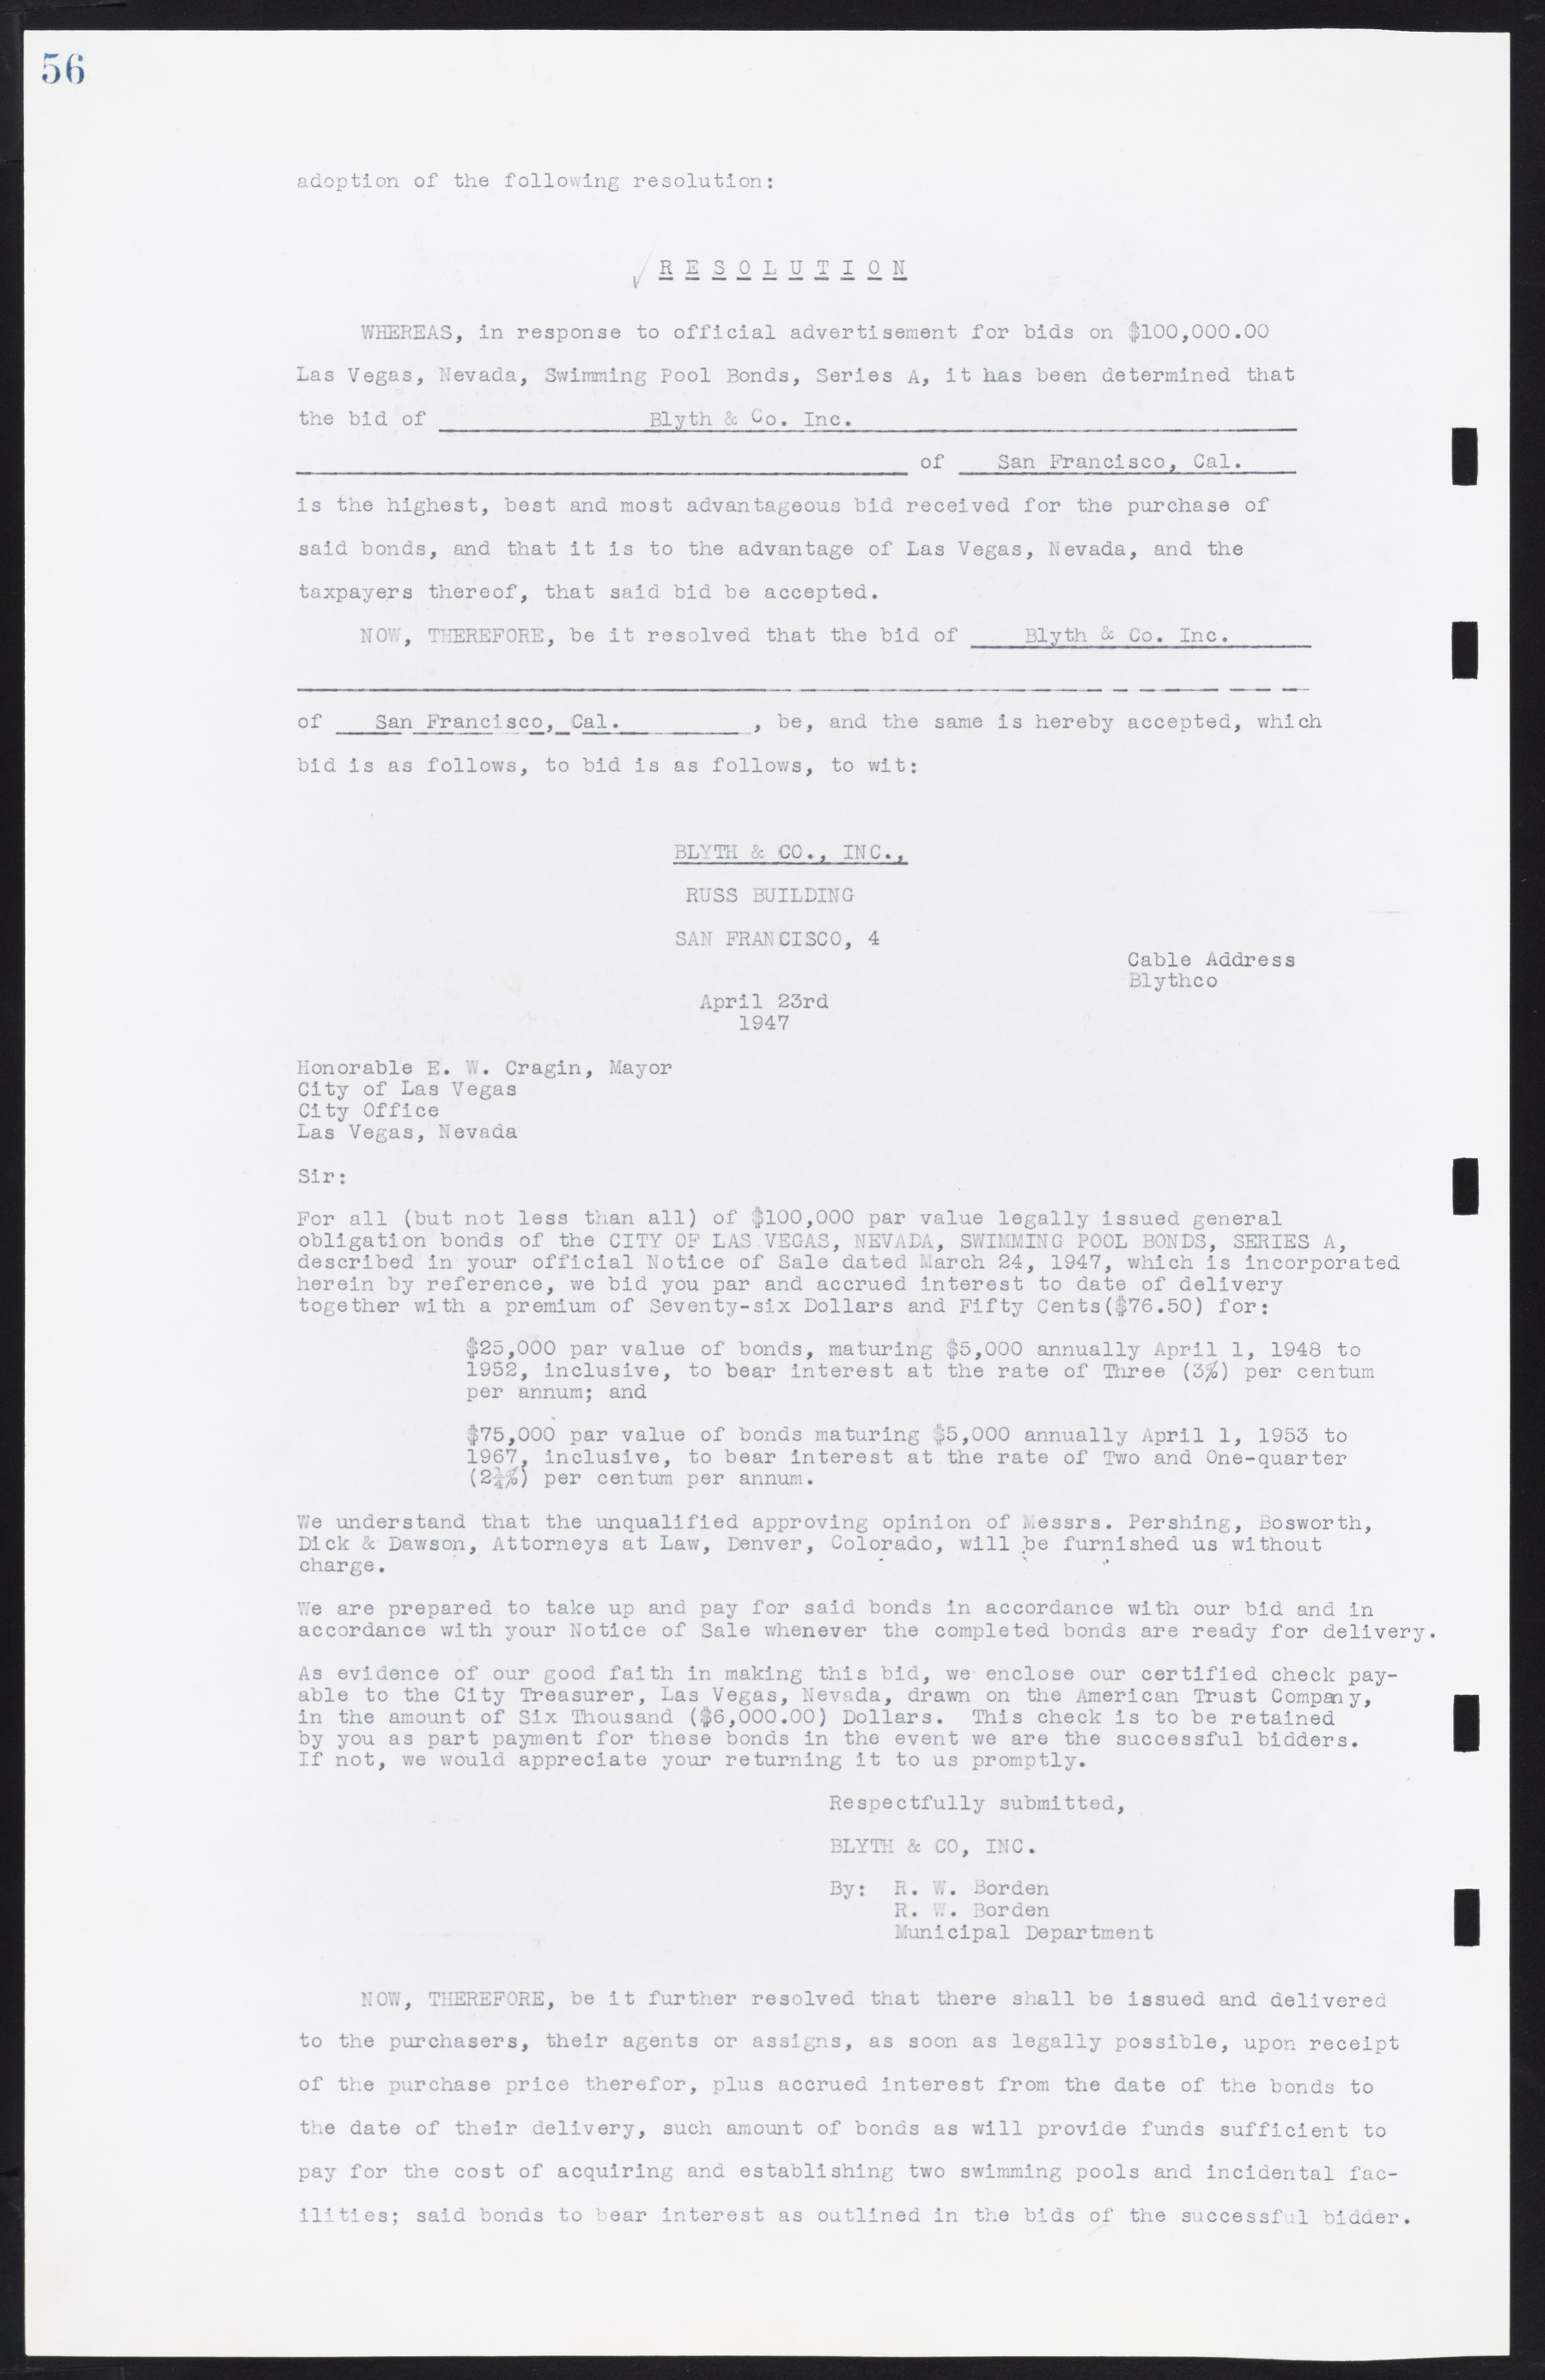 Las Vegas City Commission Minutes, January 7, 1947 to October 26, 1949, lvc000006-71